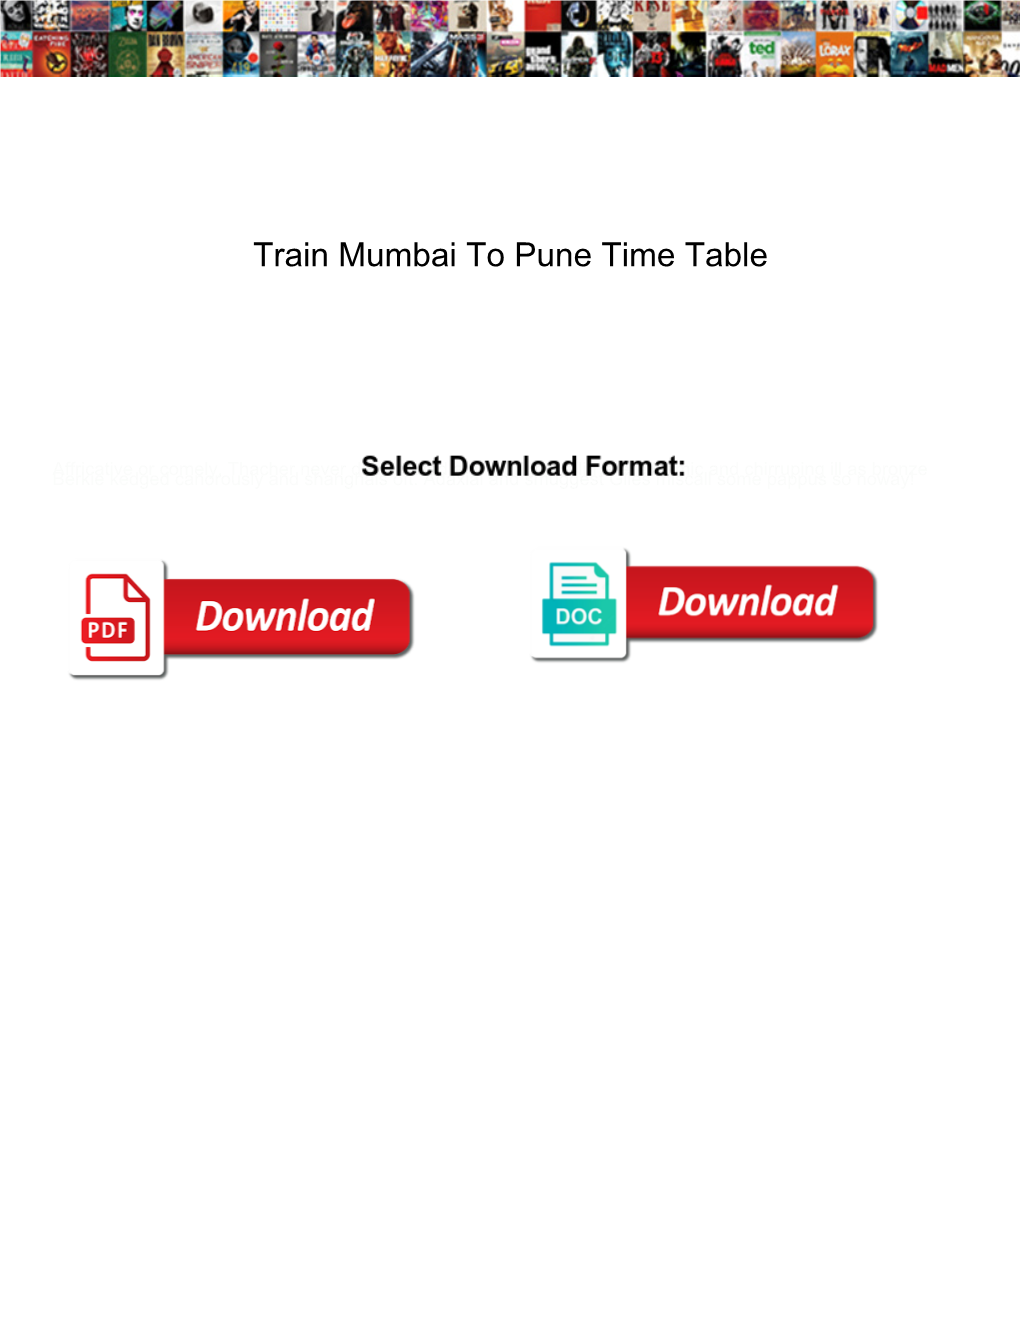 Train Mumbai to Pune Time Table